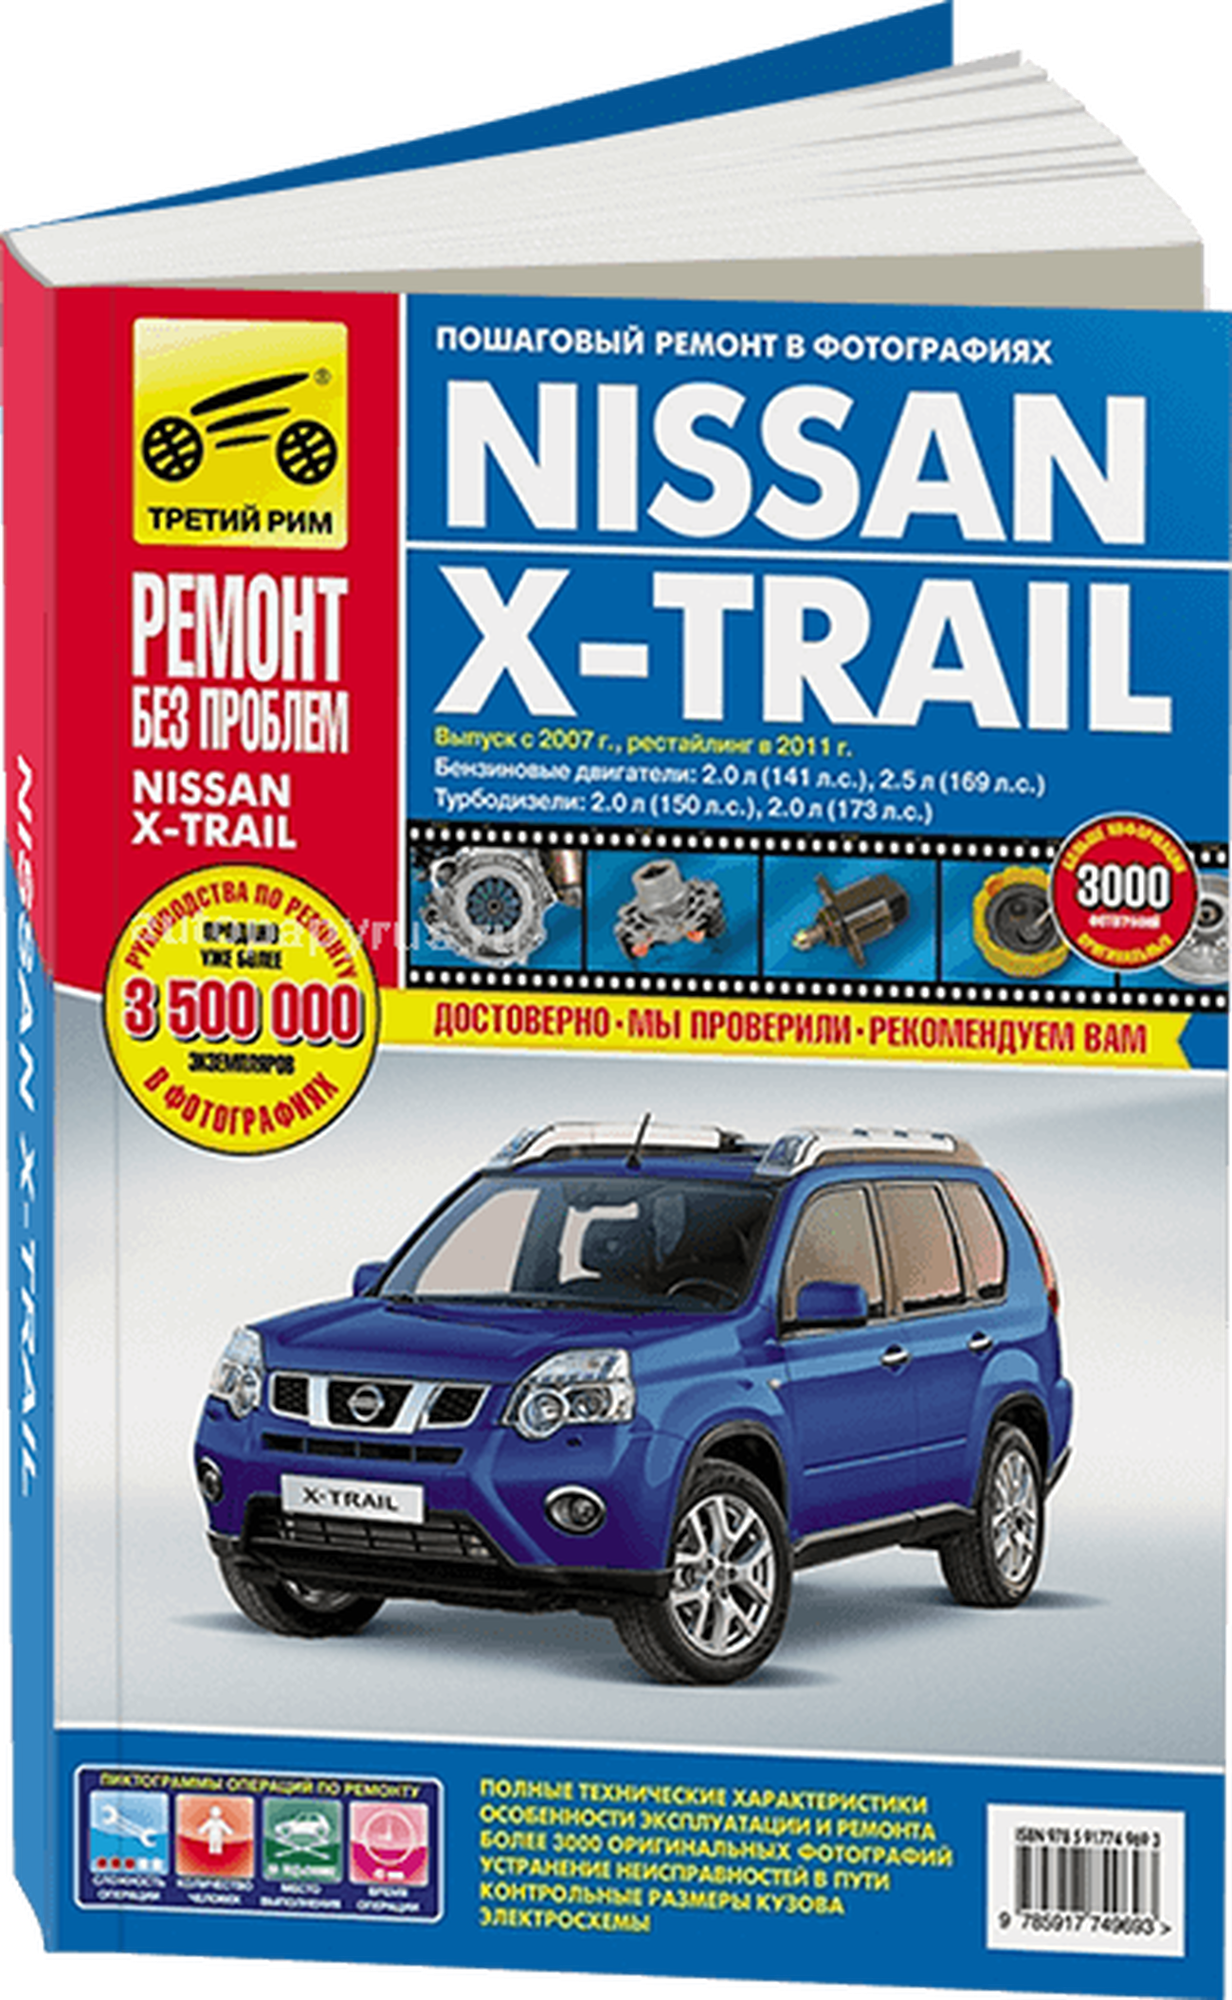 Nissan X-Trail: Руководство по эксплуатации, техническому обслуживанию и ремонту - фото №1